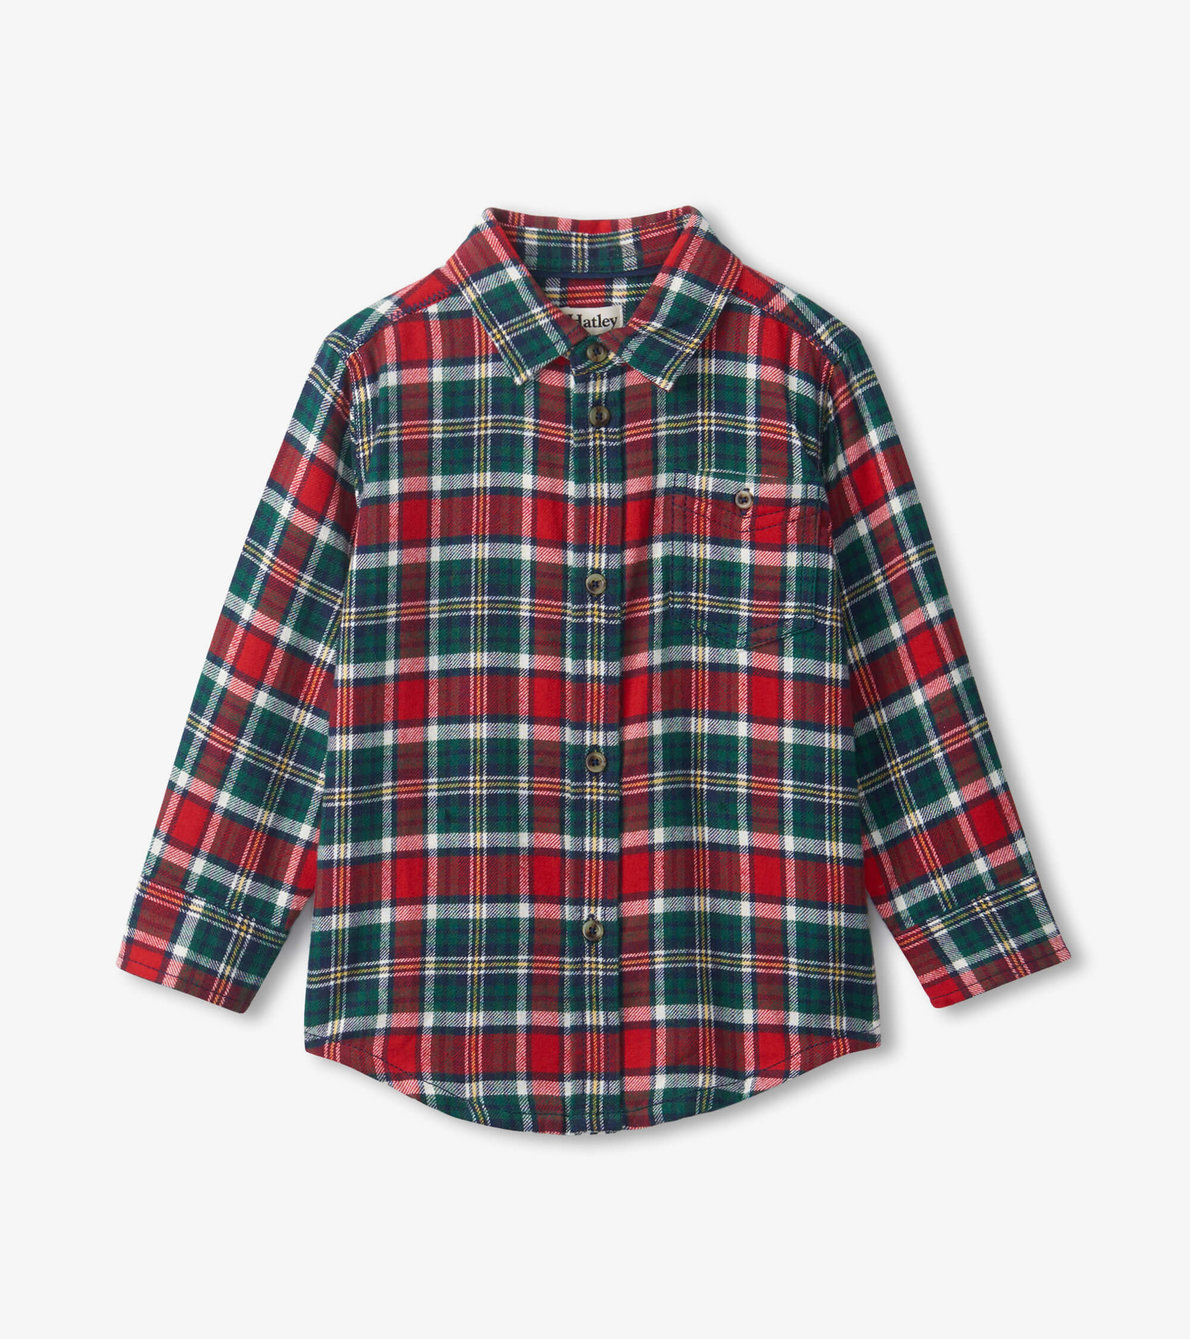 View larger image of Boys Christmas Plaid Buttondown Shirt